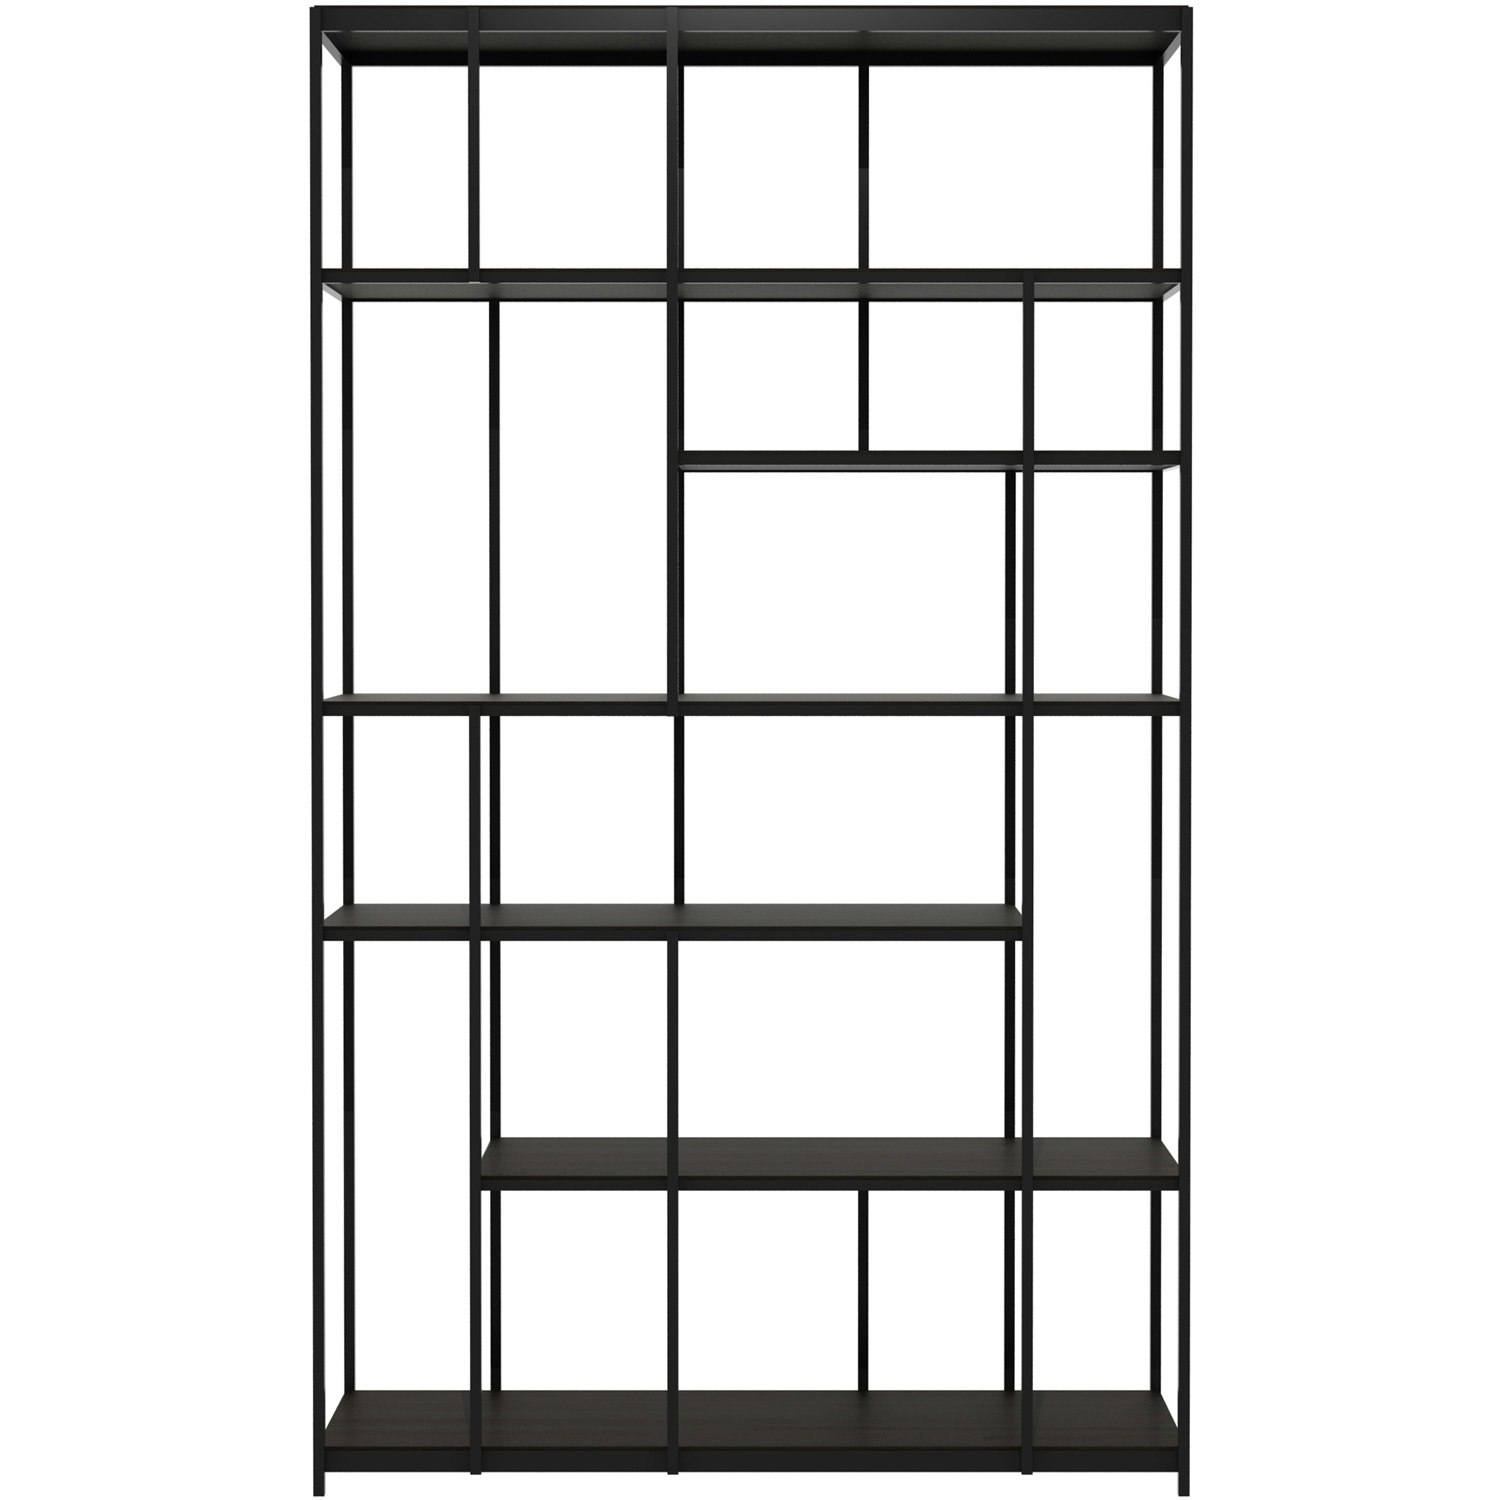 https://royaldesign.com/image/2/ethnicraft-studio-rack-bookcase-teak-1